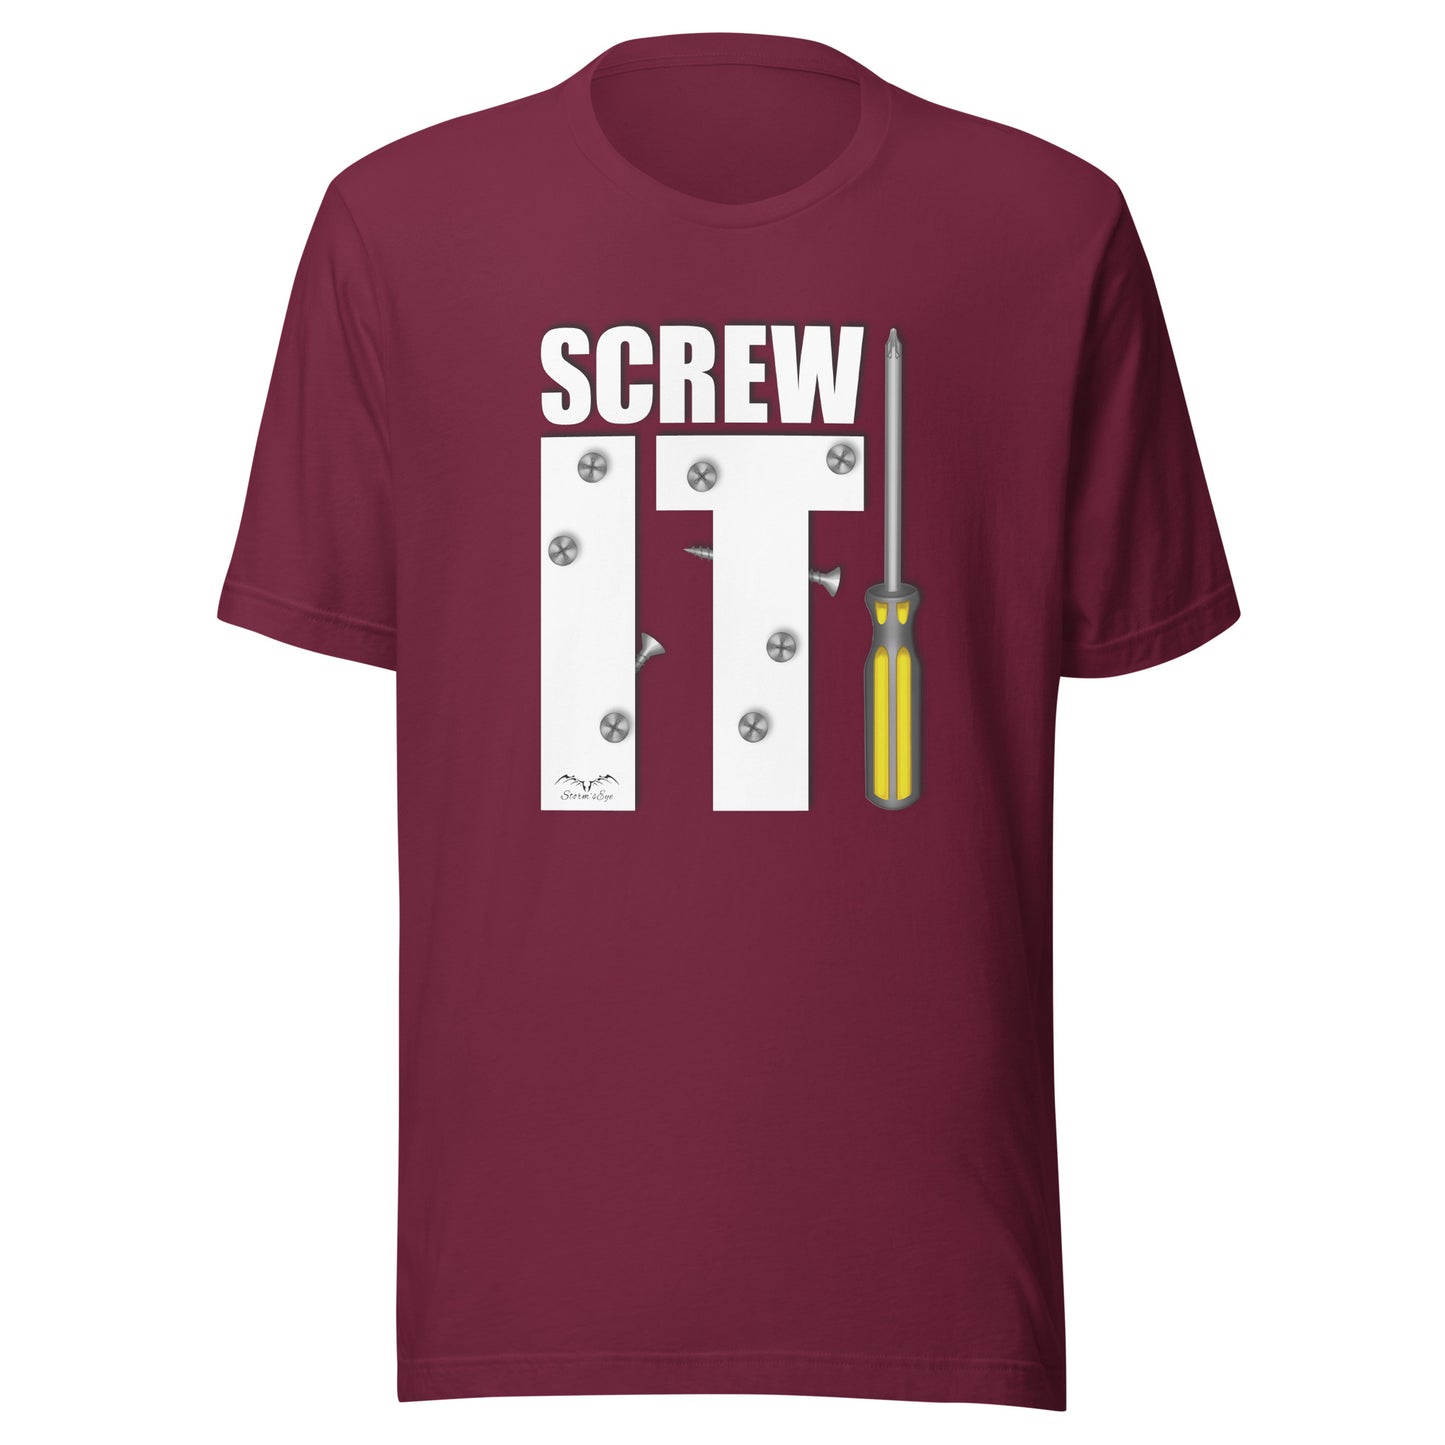 screw it DIY t-shirt wine red, by Stormseye Design